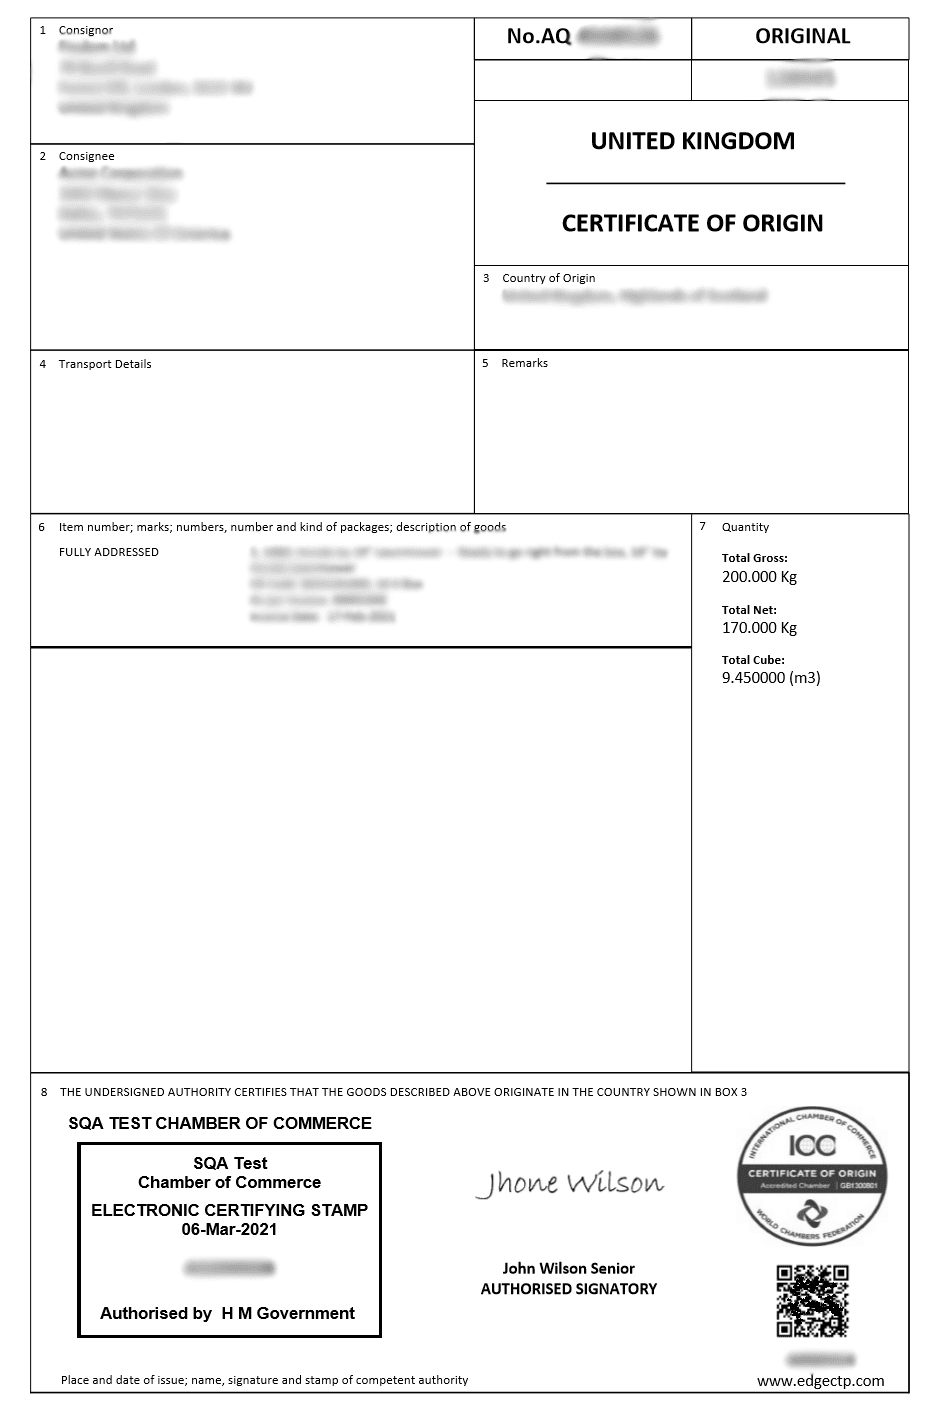 Example UK Certificate of Origin